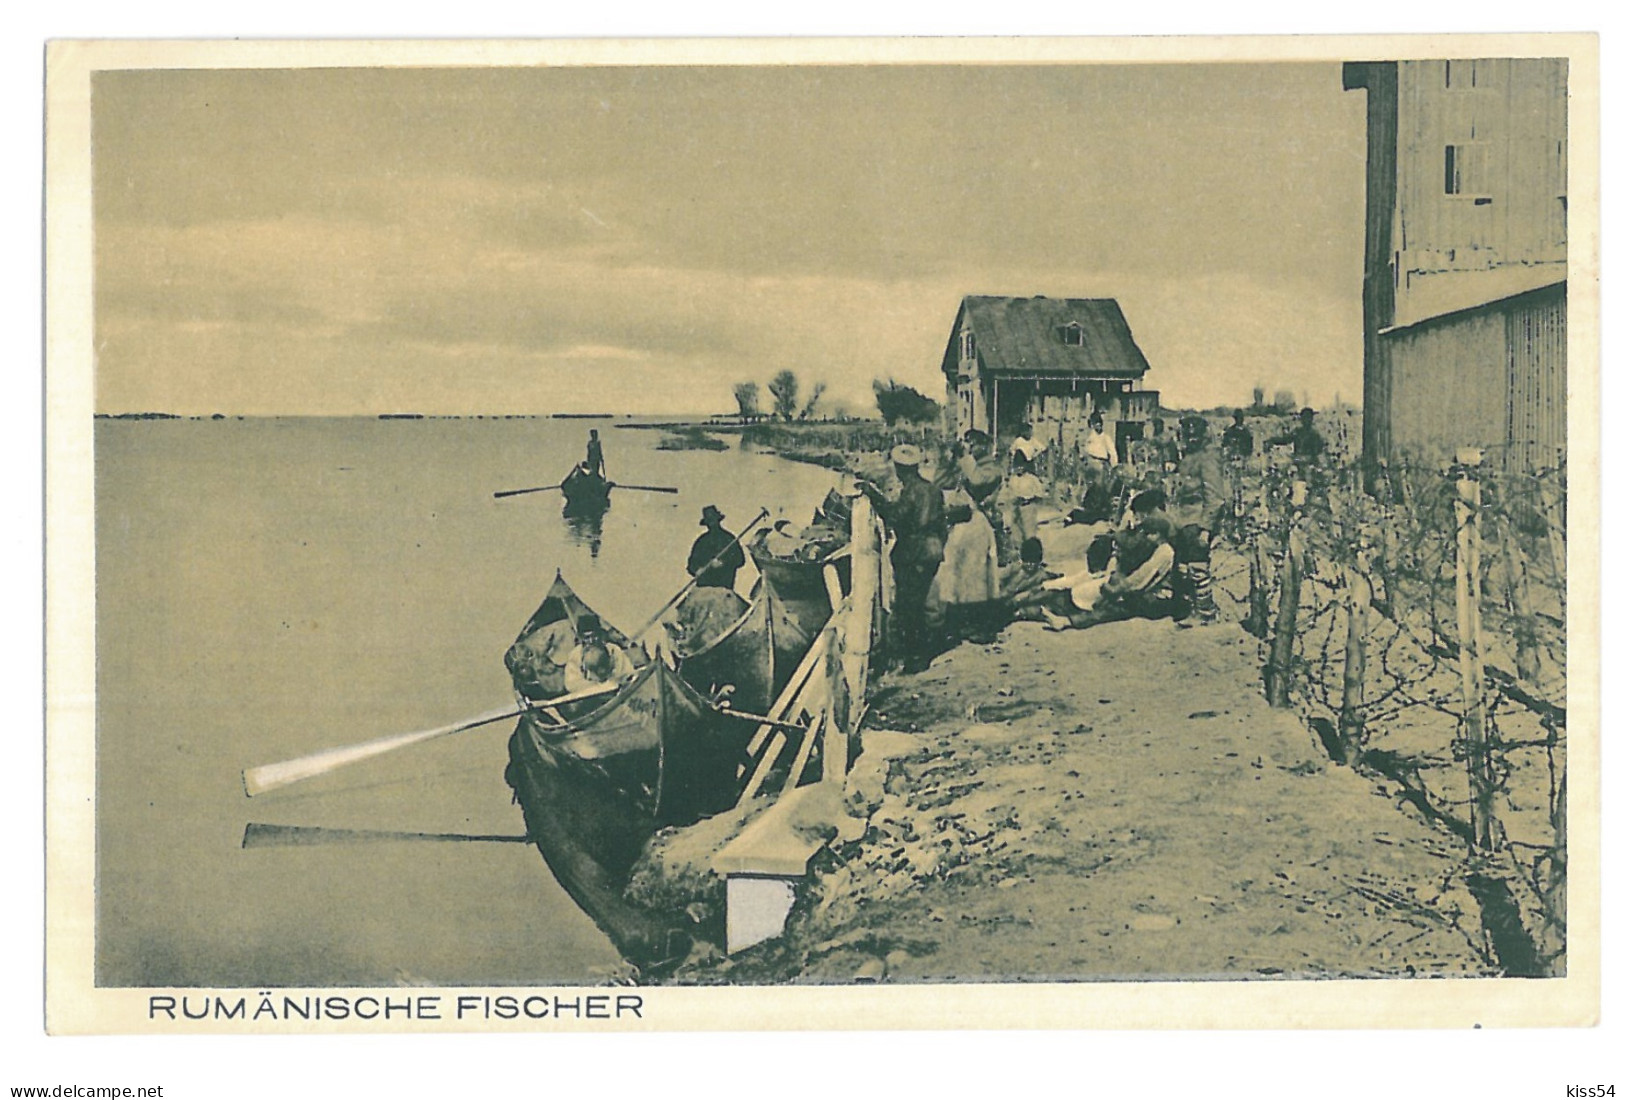 RO 45 - 11844 TULCEA, Rumanien Fishermen, Danube, Romania - Old Postcard - Unused - Roemenië